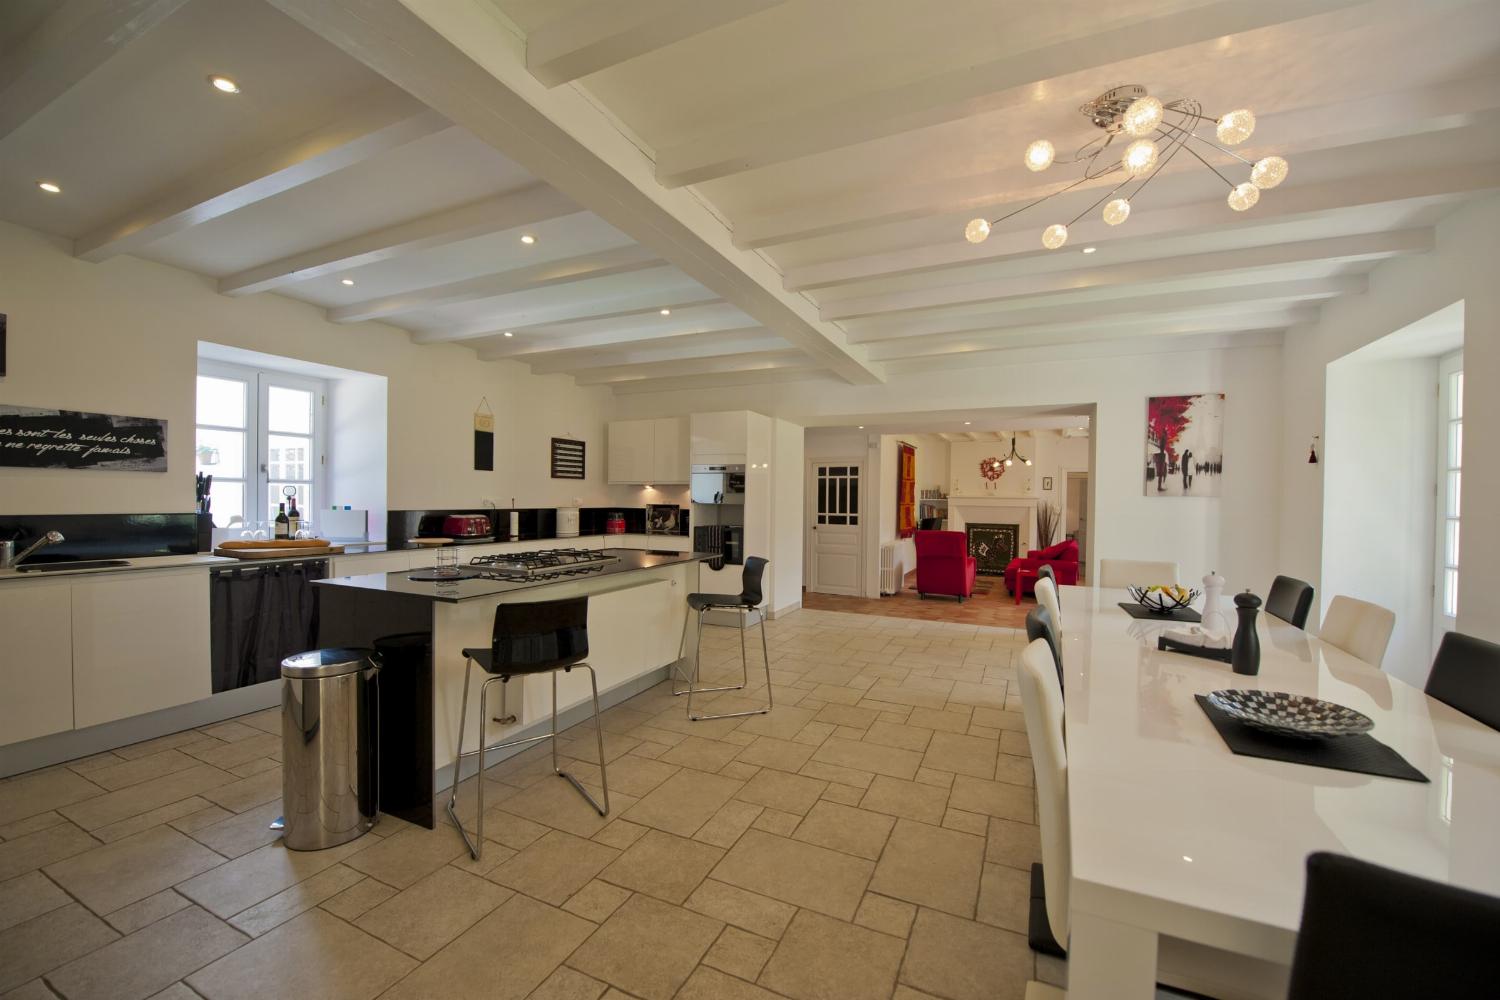 Kitchen | Rental accommodation in Charente